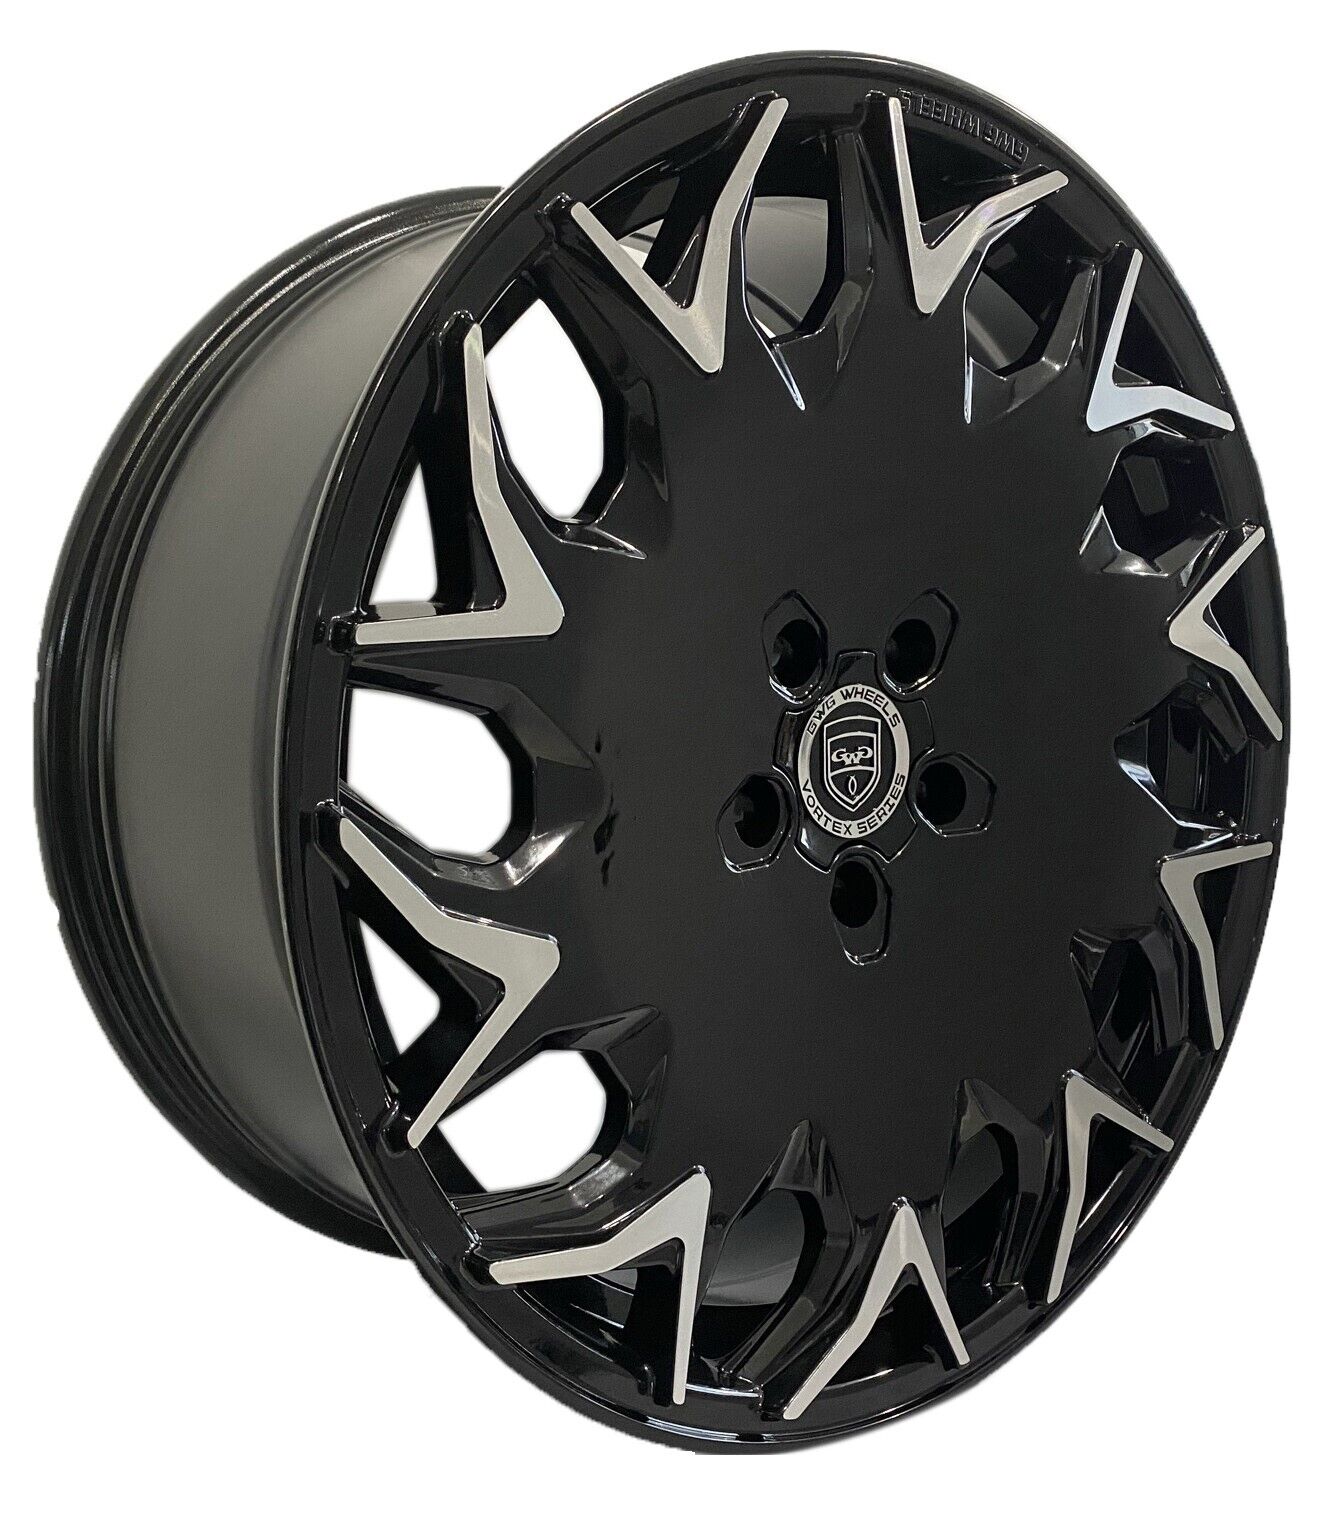 4 GV06 20 inch Staggered Black Rims fits DODGE CHALLENGER SRT8 2008-2014